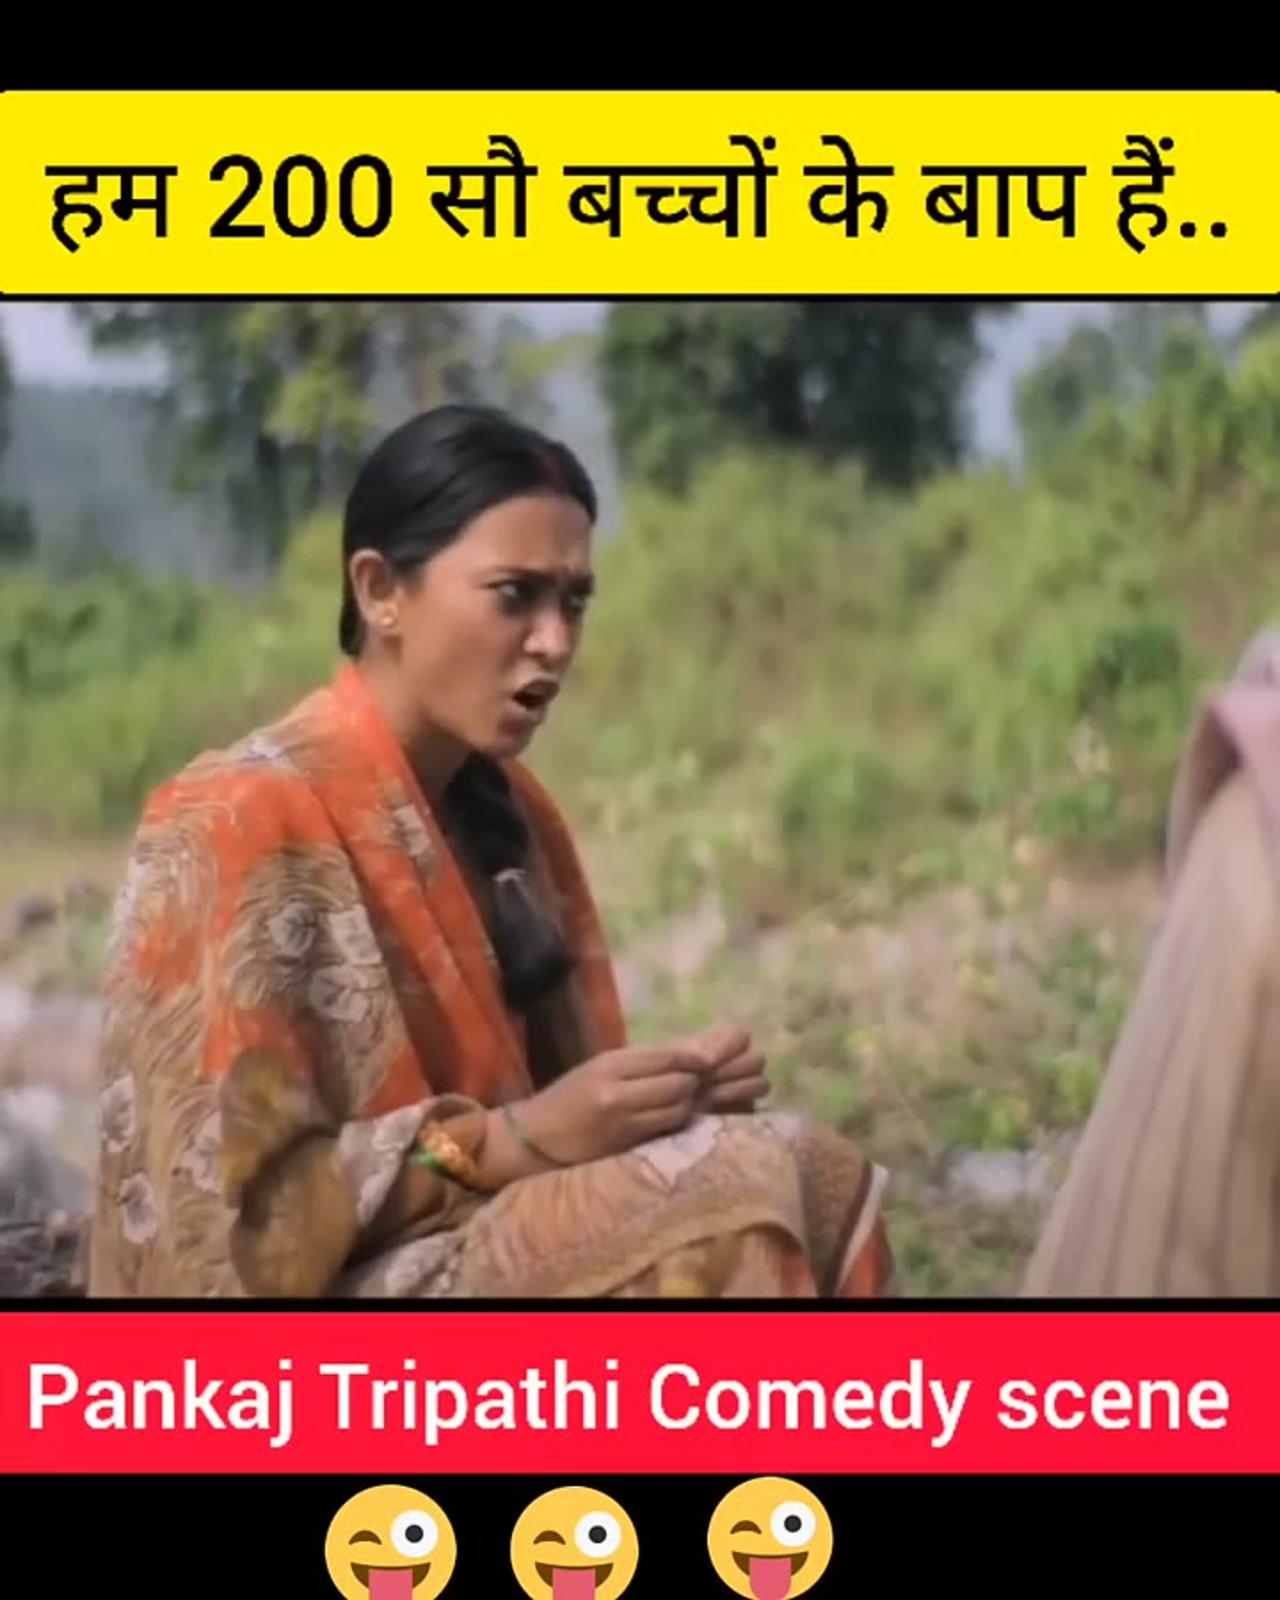 Pankaj tripathi comedy video